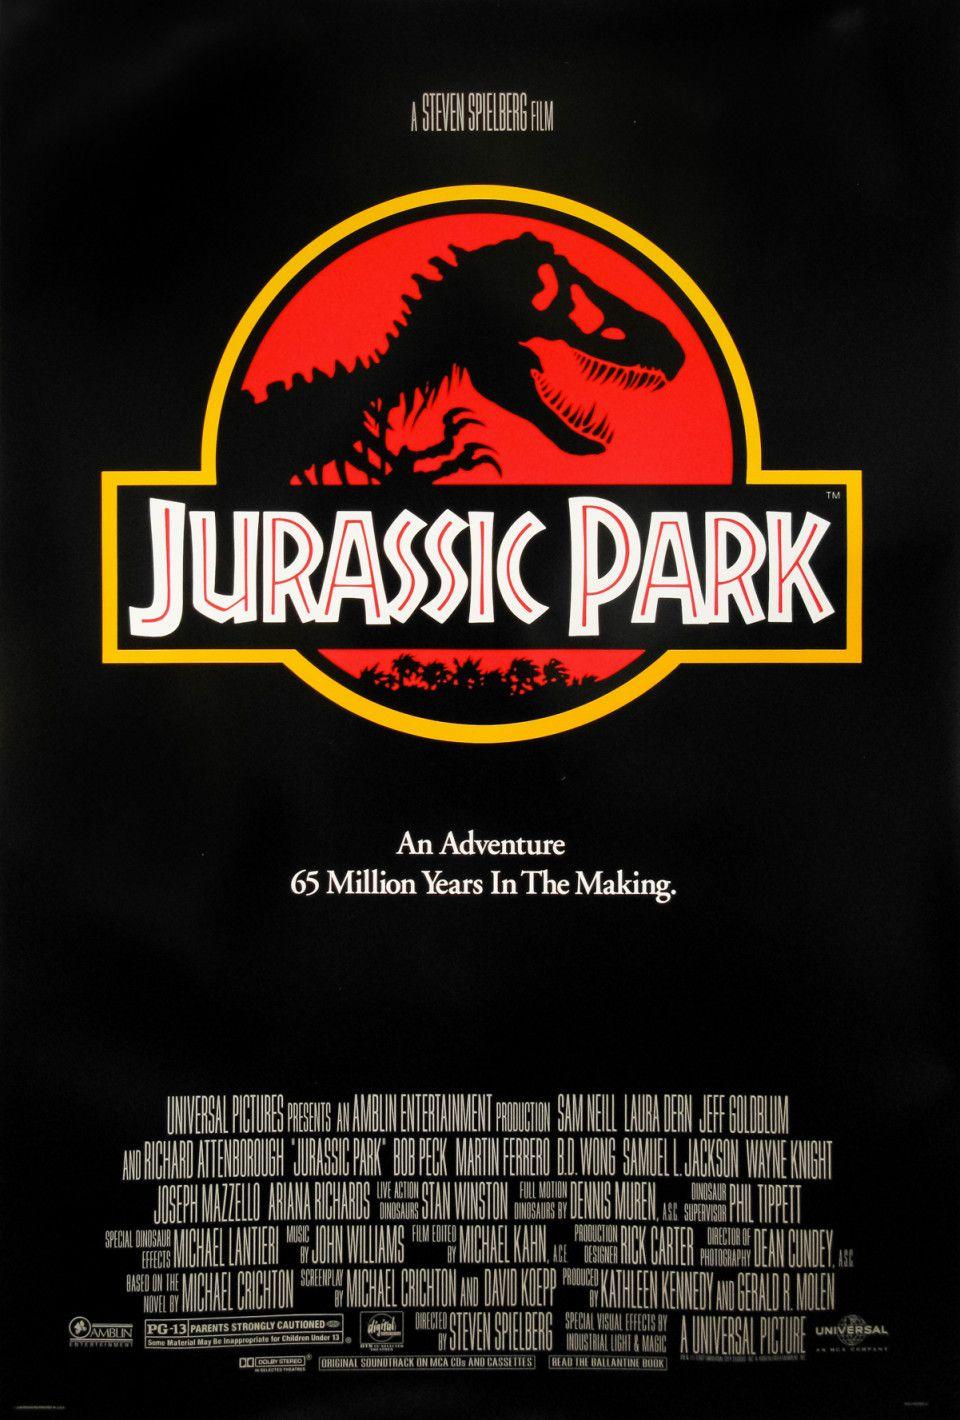 Jurassic Park Logo - The Hidden History of the Jurassic Park Logo